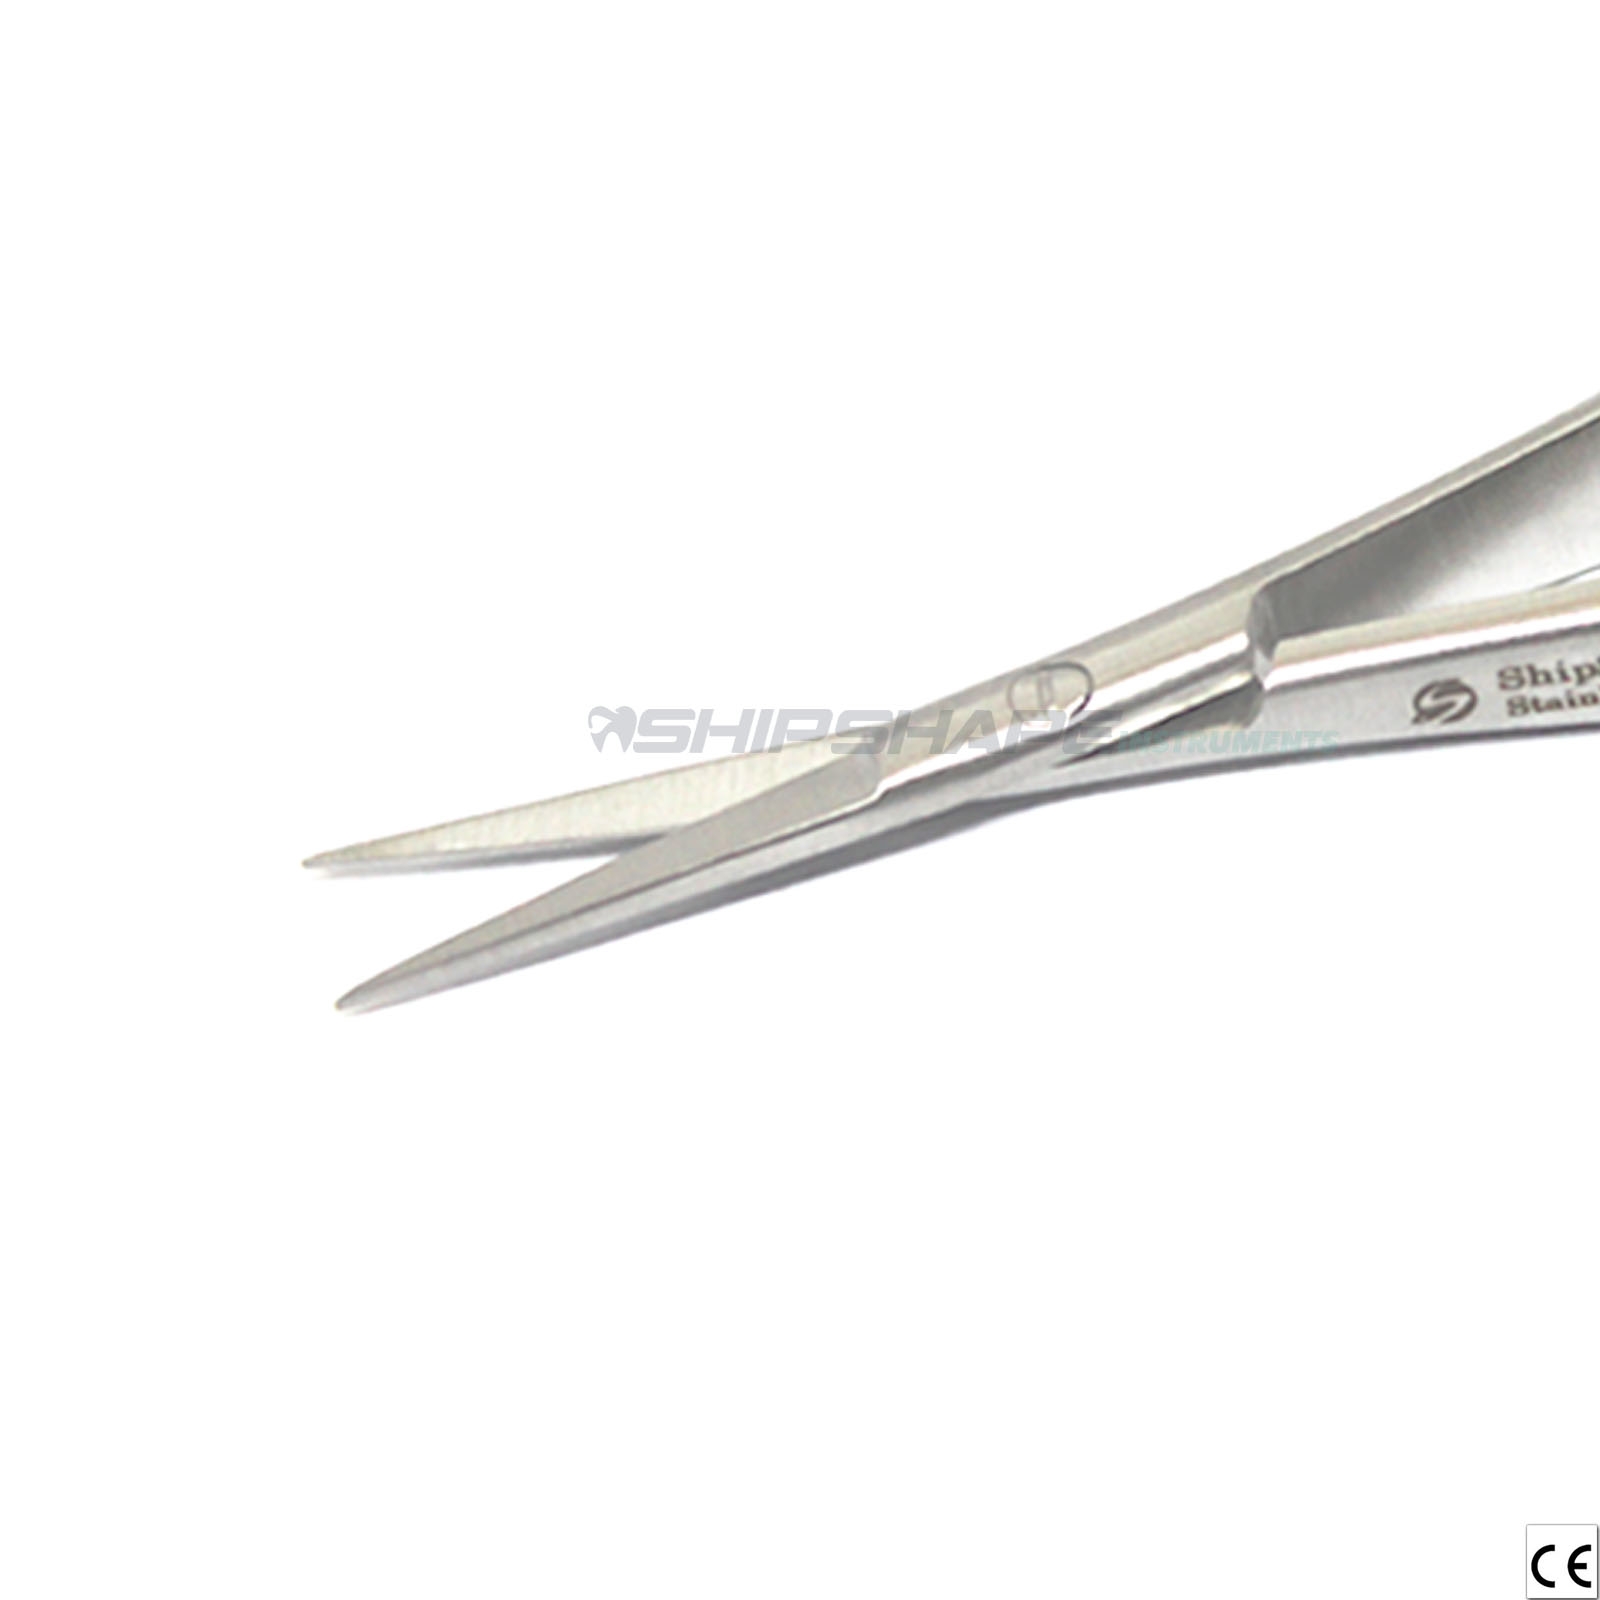 Noyes Scissor Straight 11.5cm Sharp Blades | Micro Surgical Scissor Shipshape Instruments-1426